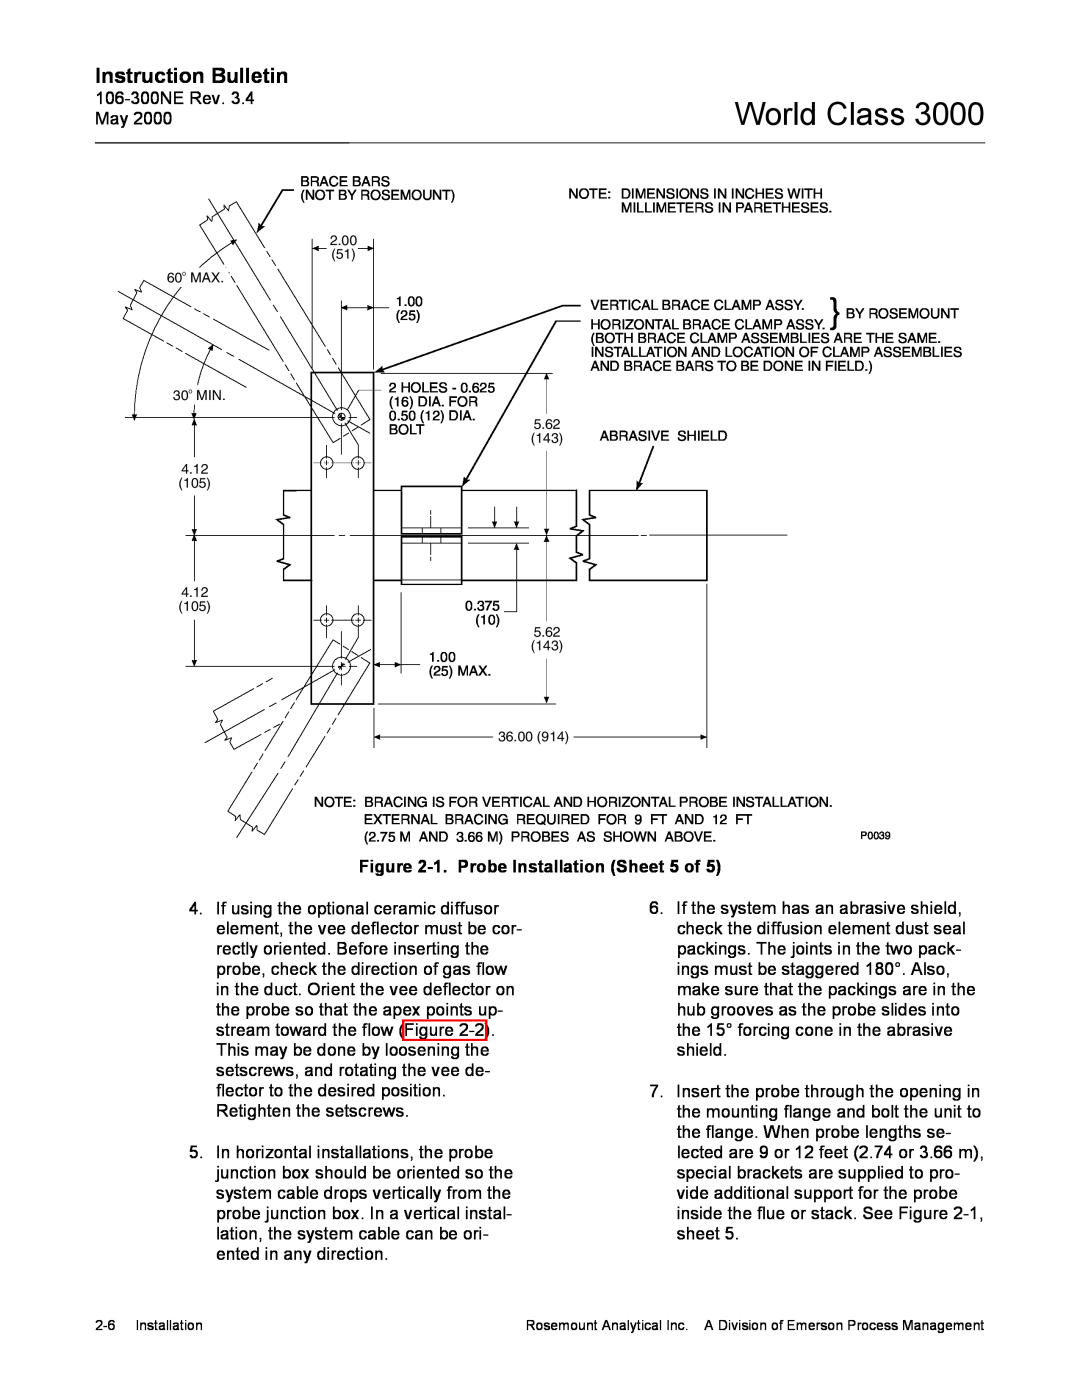 Emerson 3000 manual Instruction Bulletin, 1.Probe Installation Sheet 5 of 